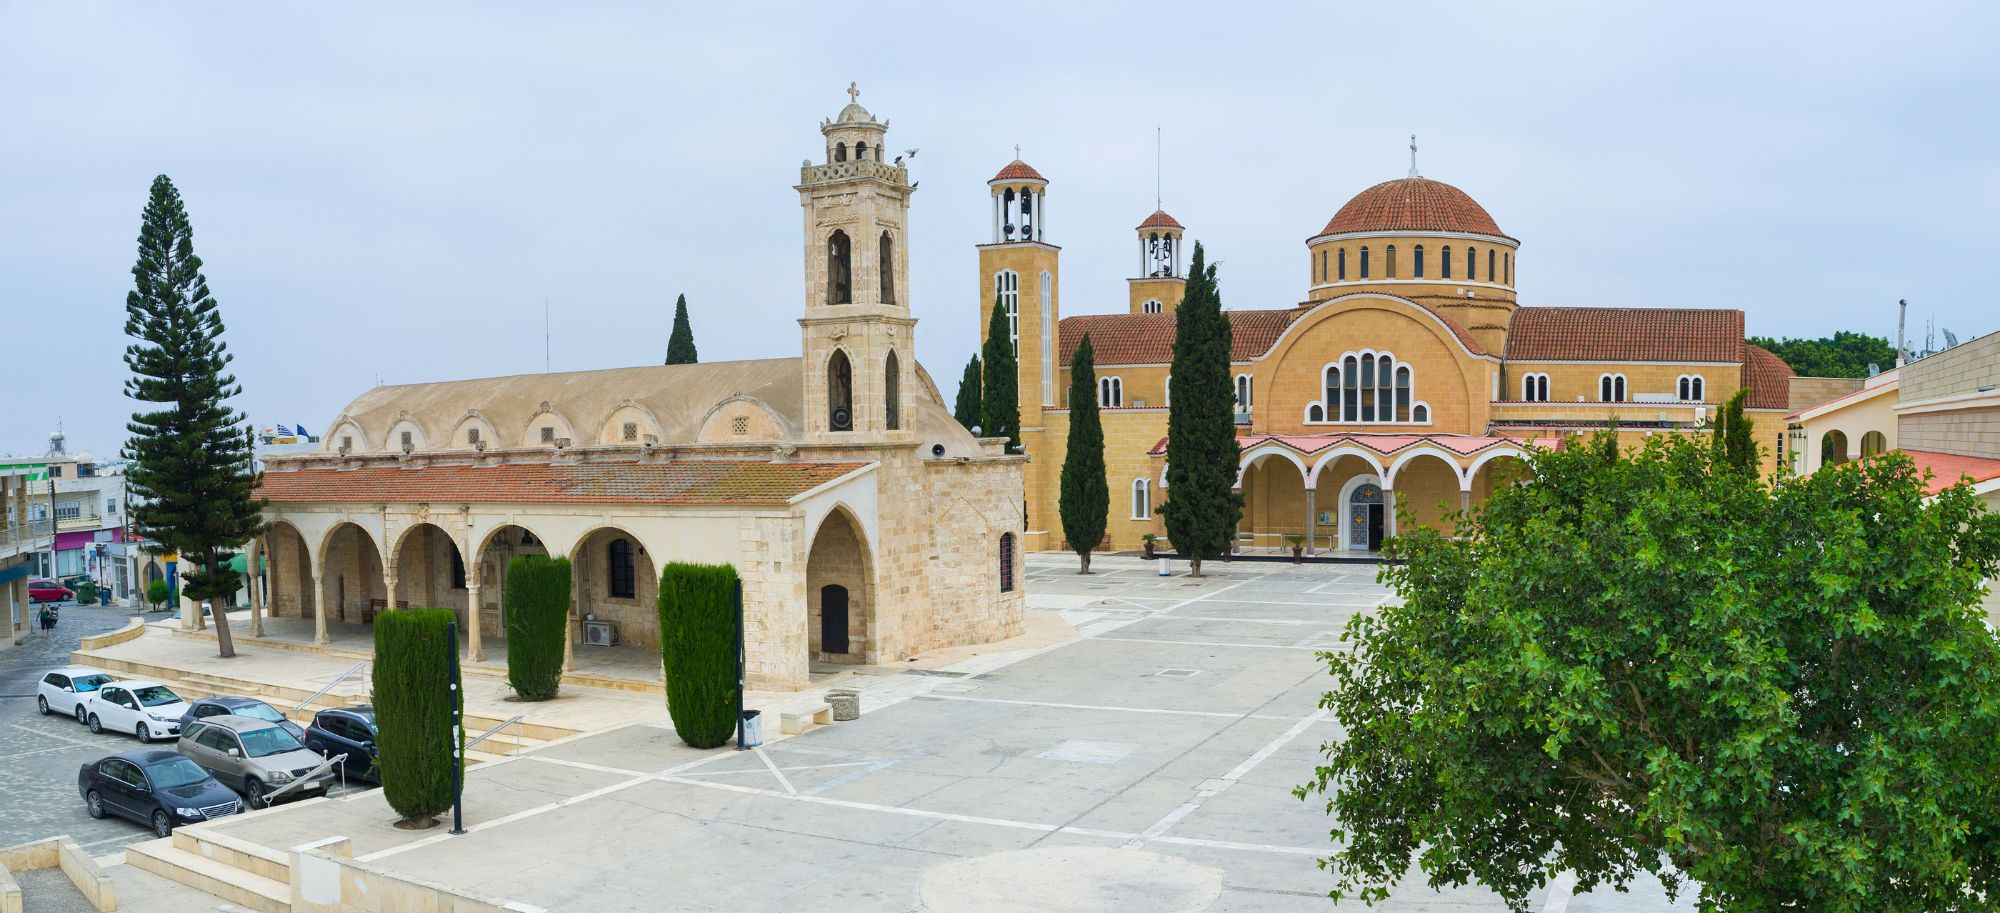 the cathedral squarejpg Νέα Αμμοχώστου